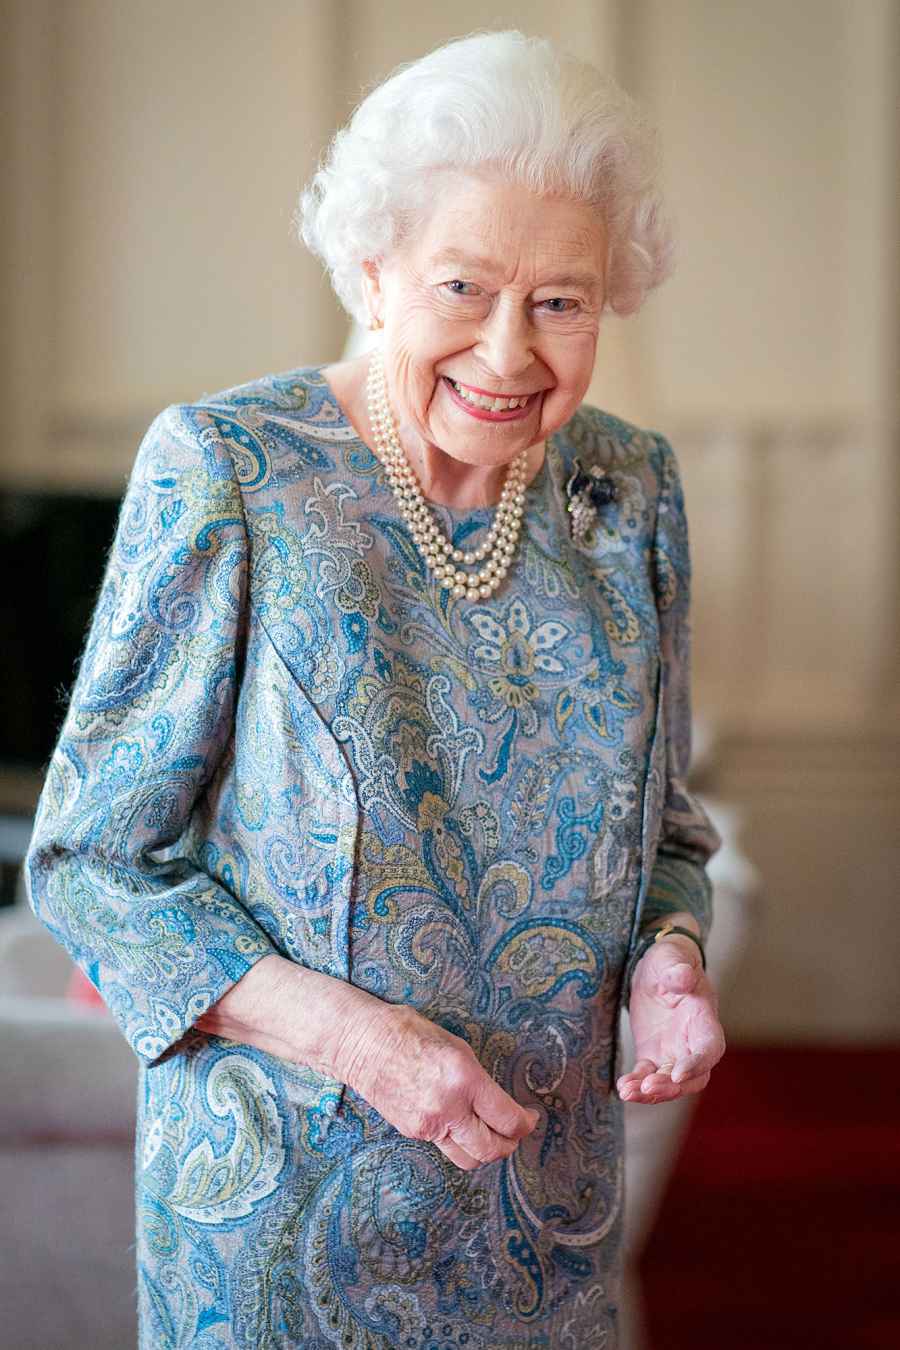 Queen Elizabeth II Royal Family Wish Prince Harry Son Archie a Happy Birthday